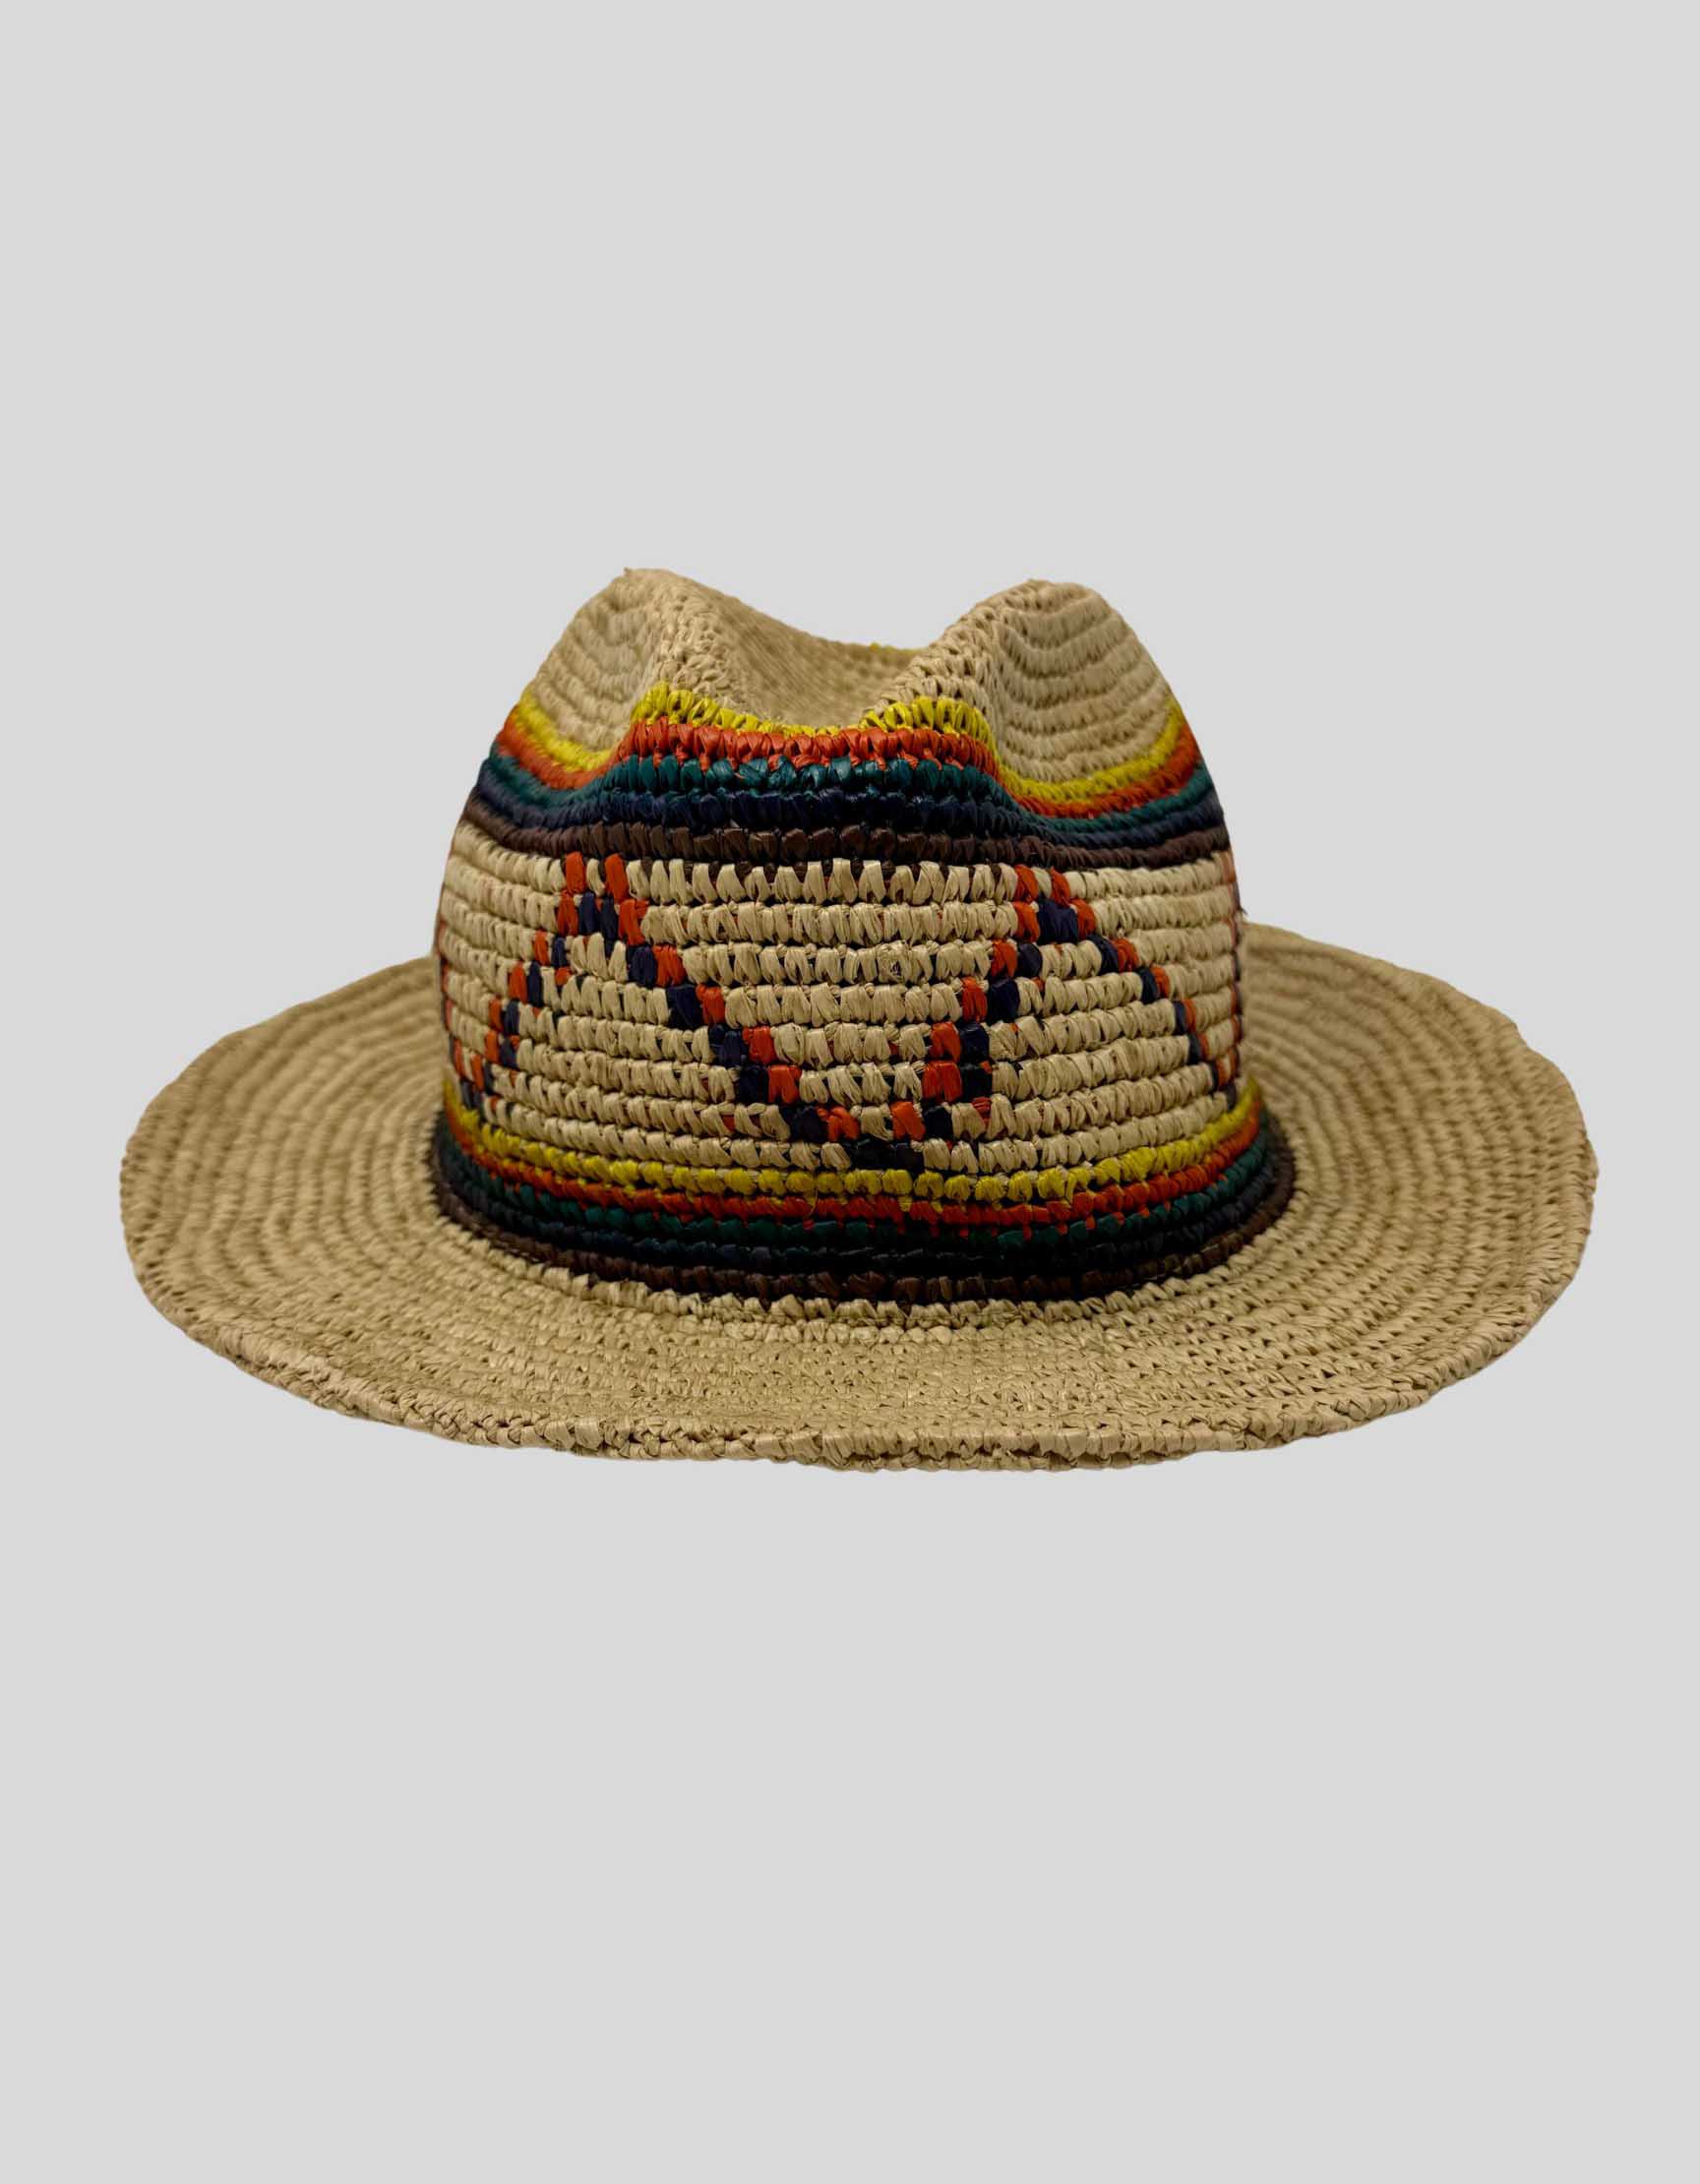 PAUL SMITH Mainline Crotcheted Straw Trilby Hat